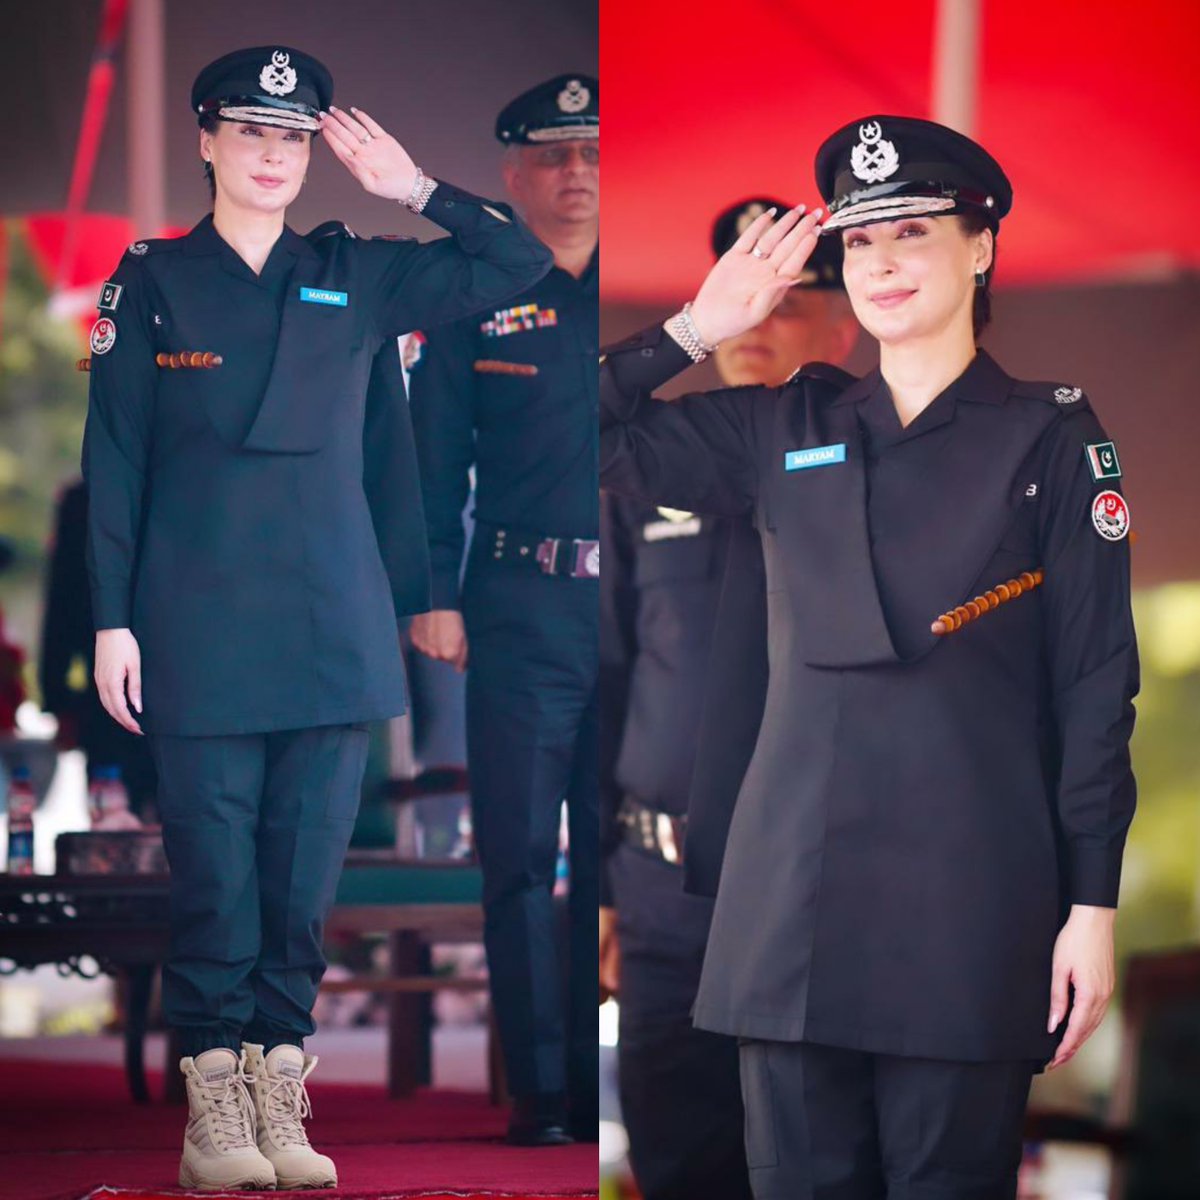 CM Punjab #MaryamNawaz is wearing the uniform of 𝐏𝐮𝐧𝐣𝐚𝐛 𝐄𝐥𝐢𝐭𝐞 𝐅𝐨𝐫𝐜𝐞 on passing out parade 🖤